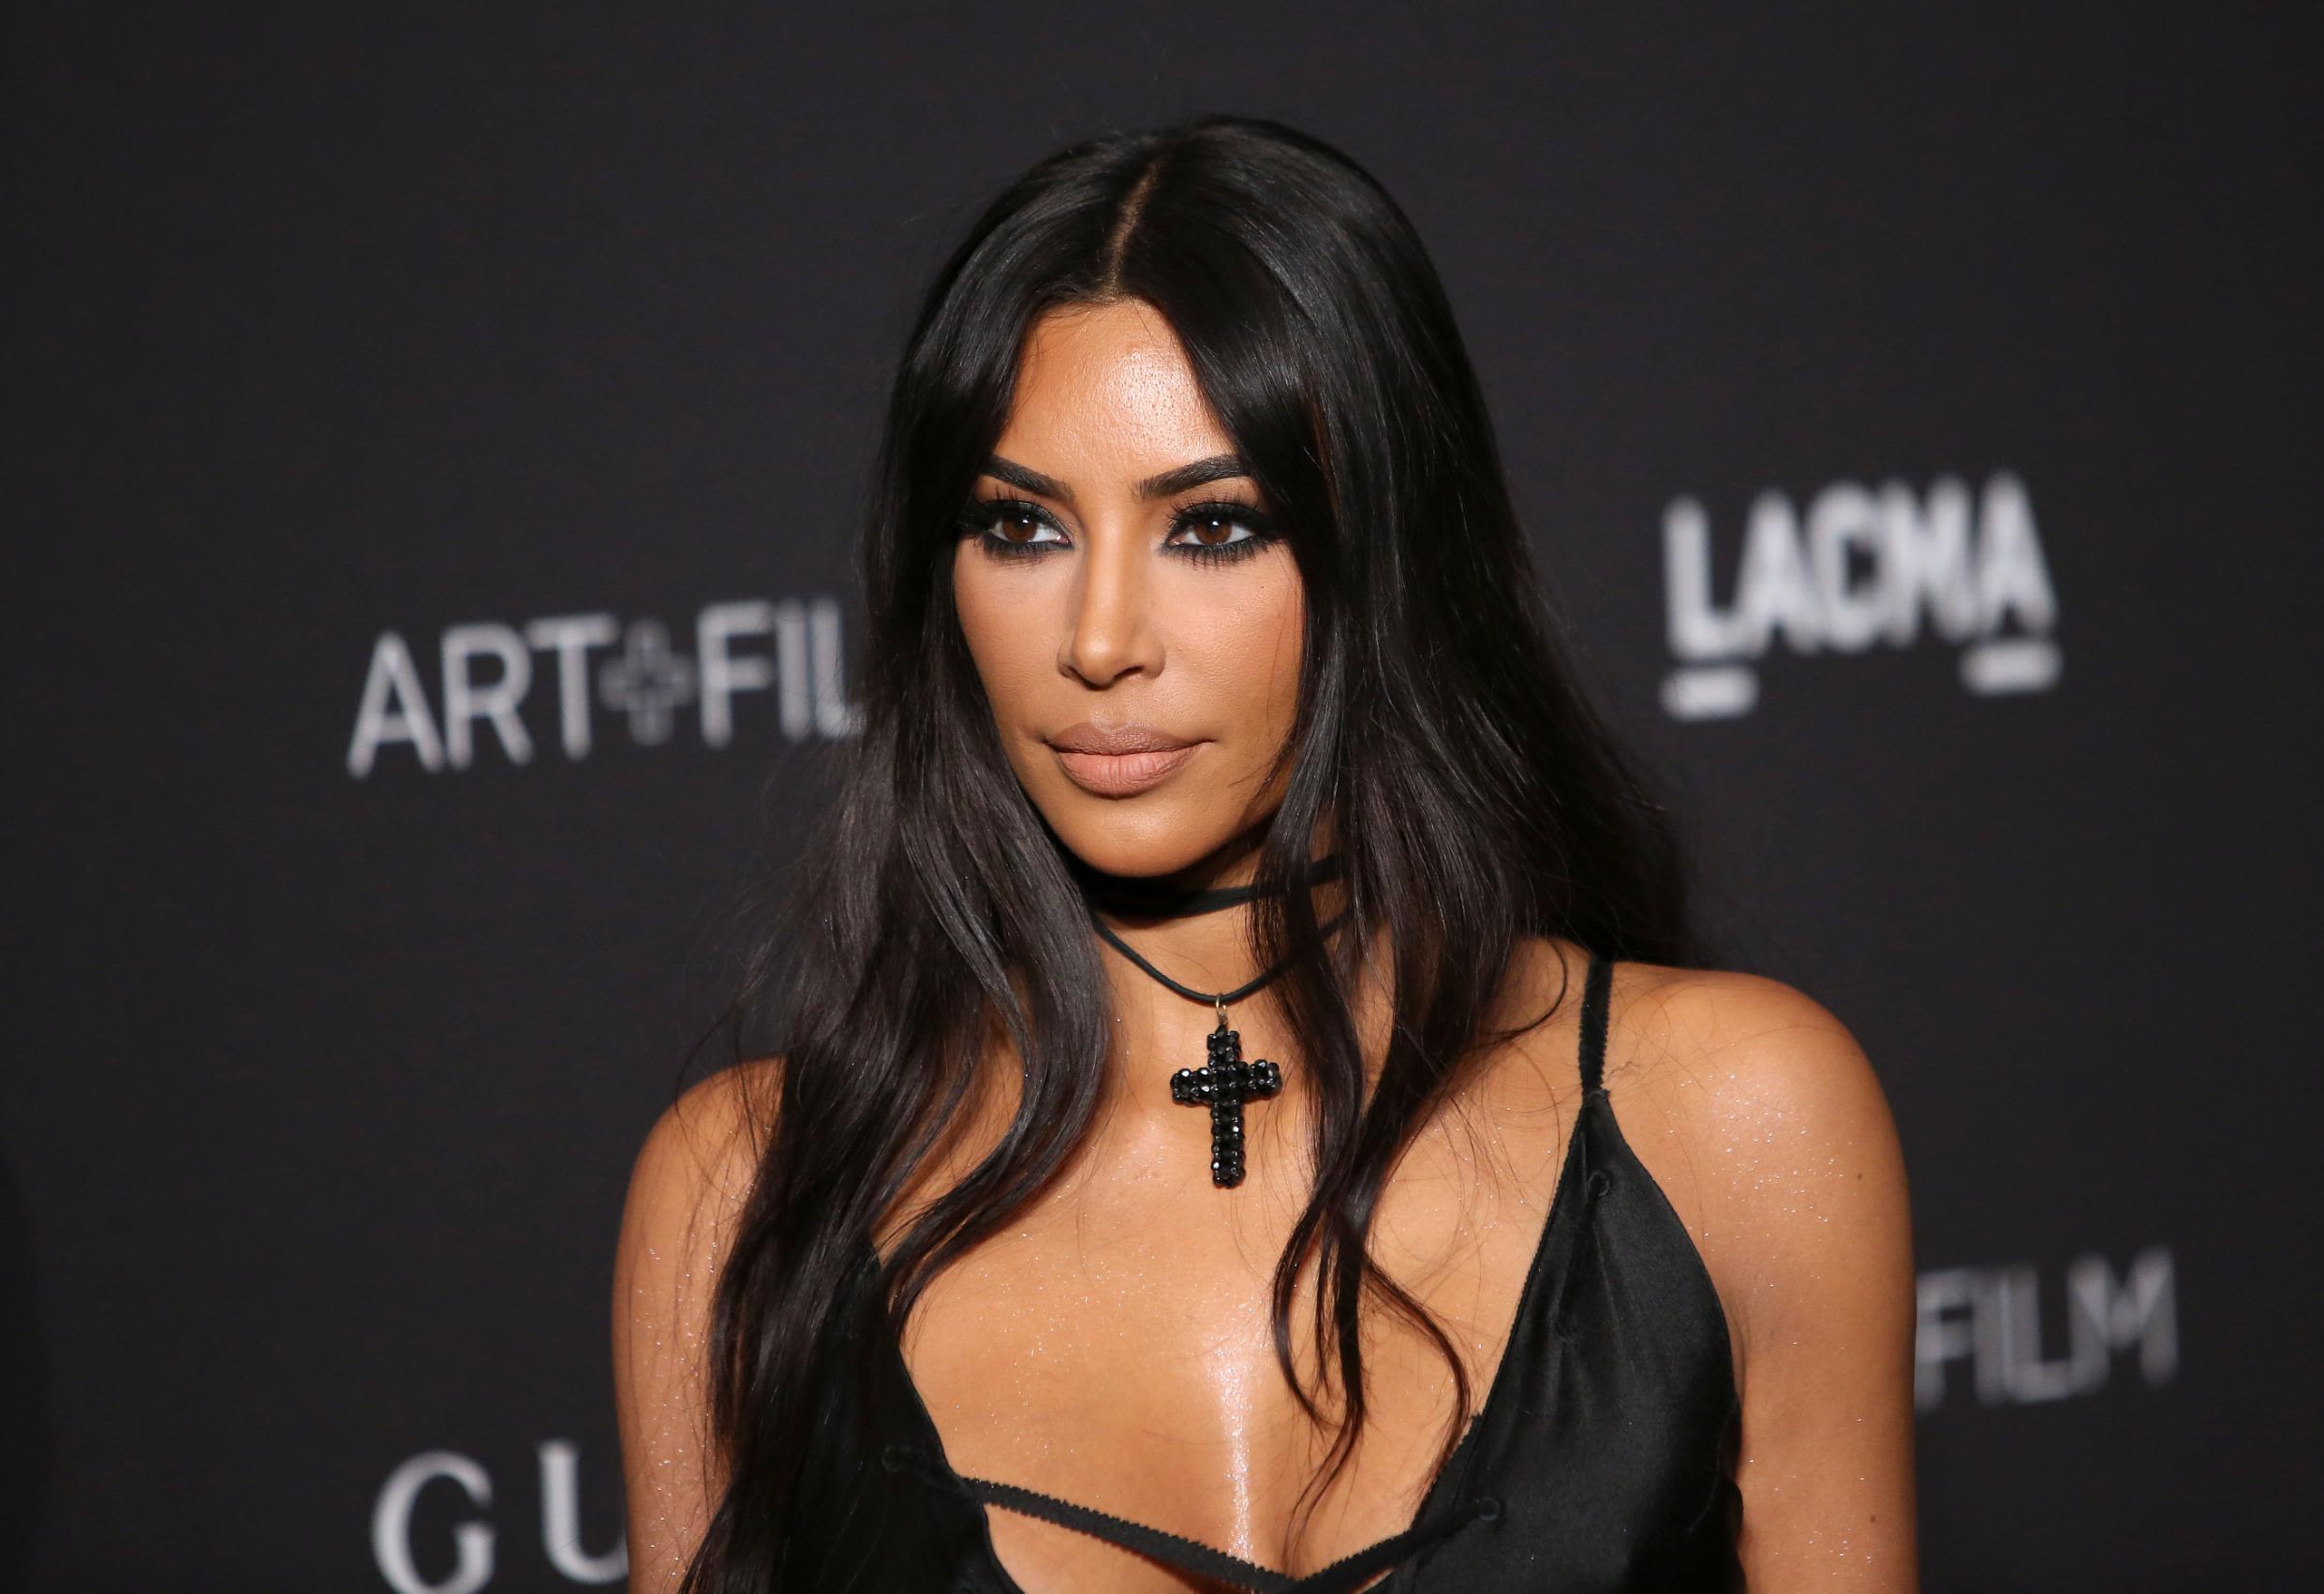 Kim Kardashian West introduces Kimono, a shapewear line “for every